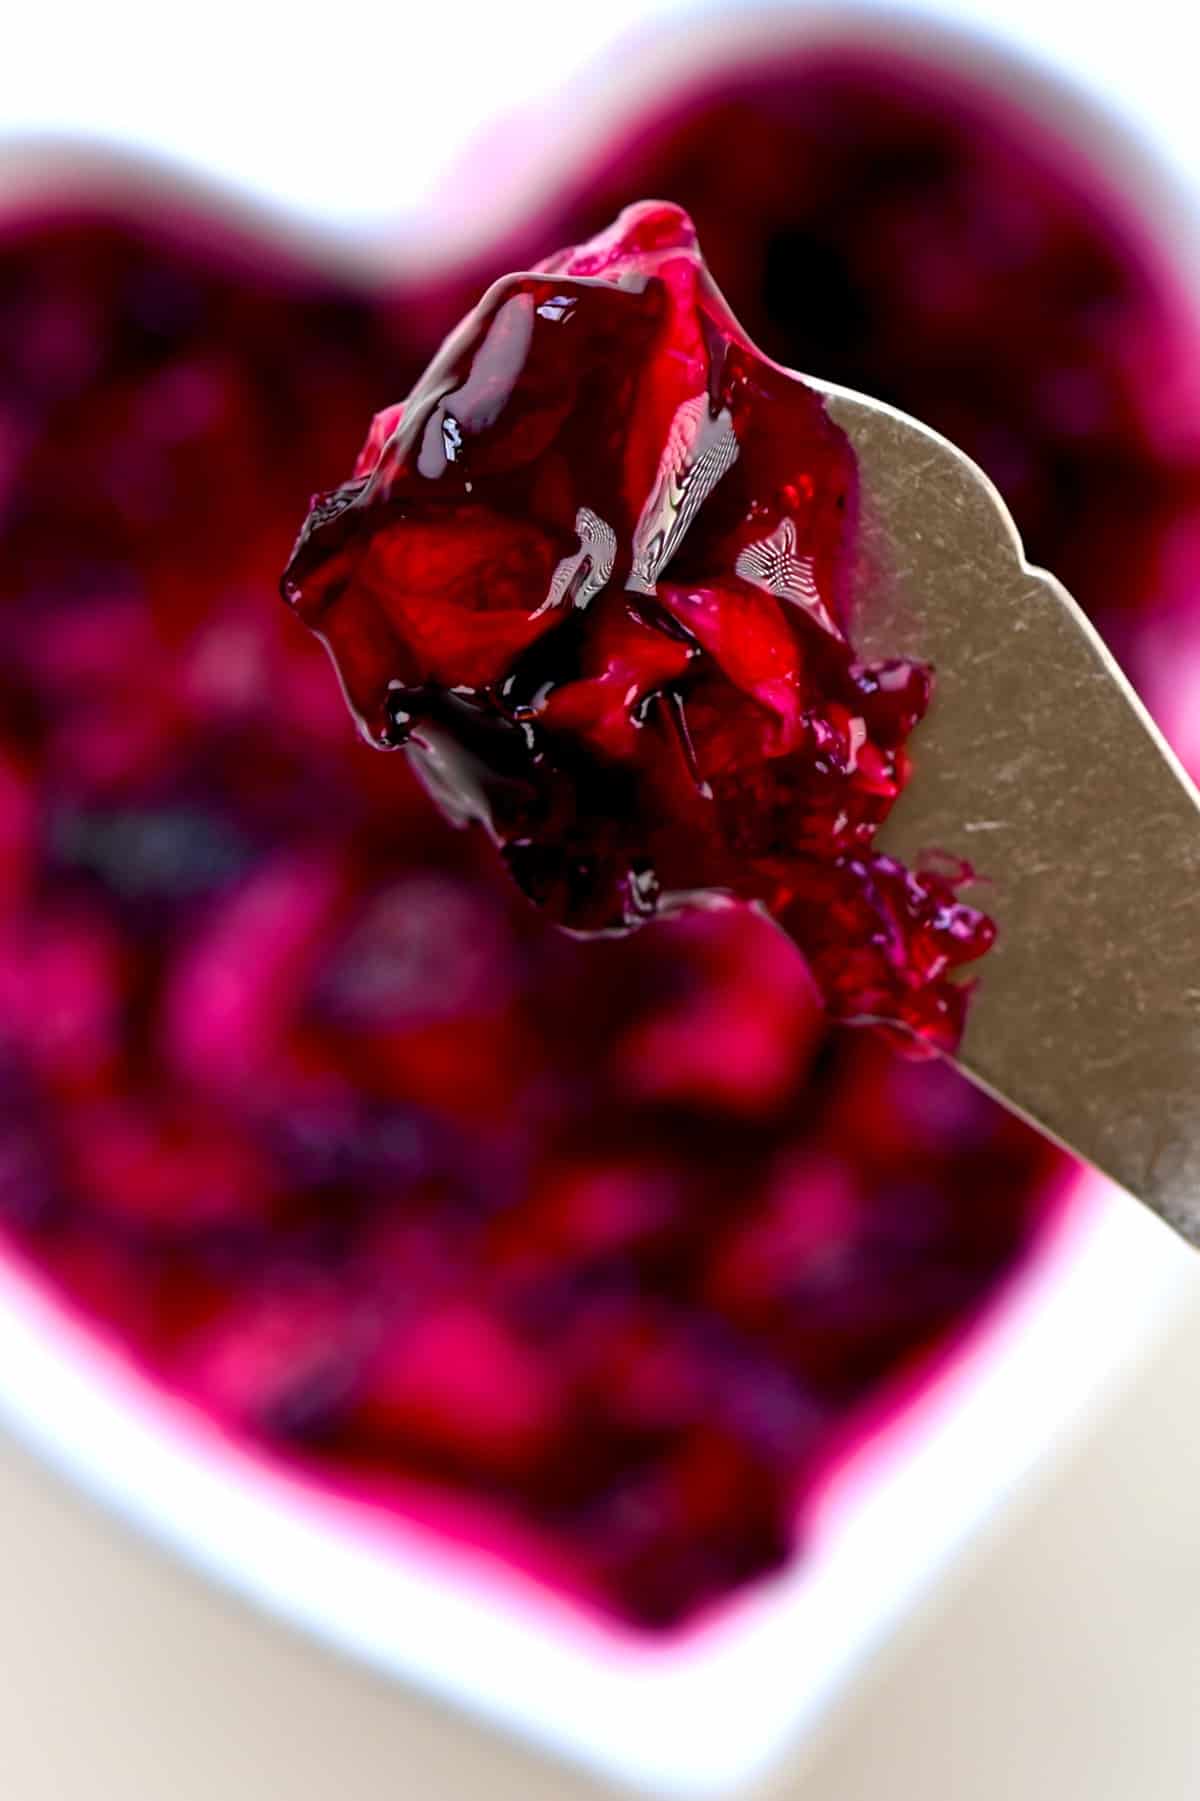 homemade-rose-petal-jam-uses-alphafoodie